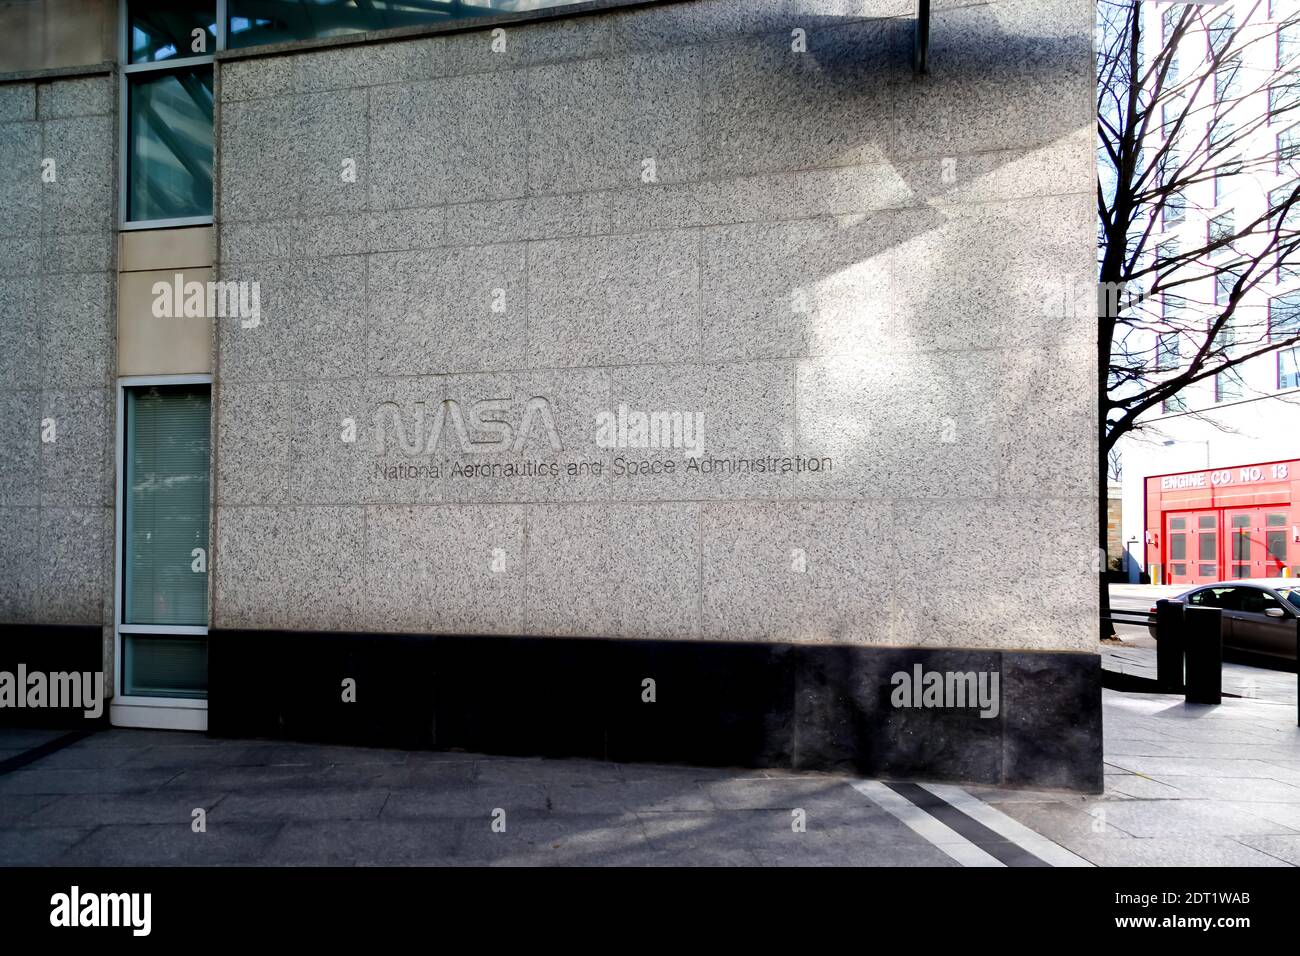 NASA sign outside their headquarters in Washington, D.C. Stock Photo